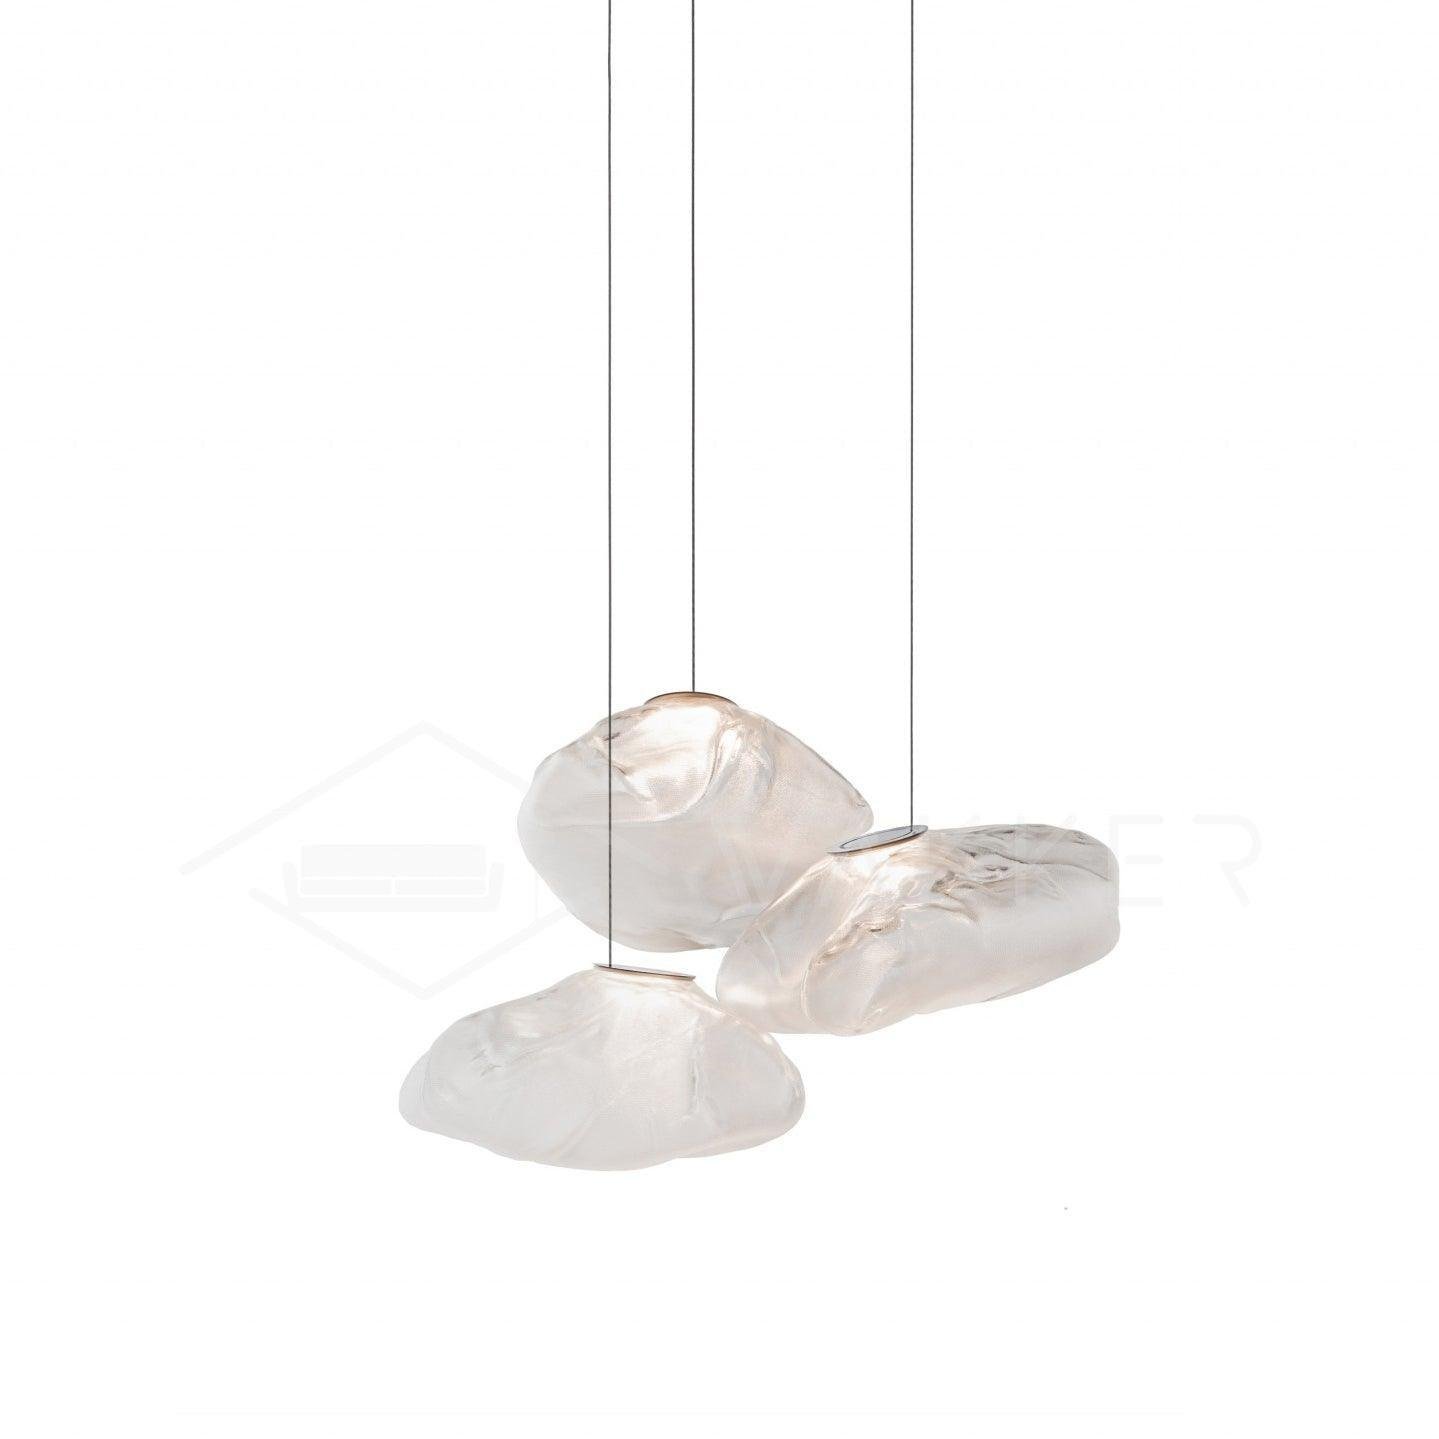 3-Headed Random Pendant Light Featuring a 30cm Diameter Round Canopy and Transparent Glass